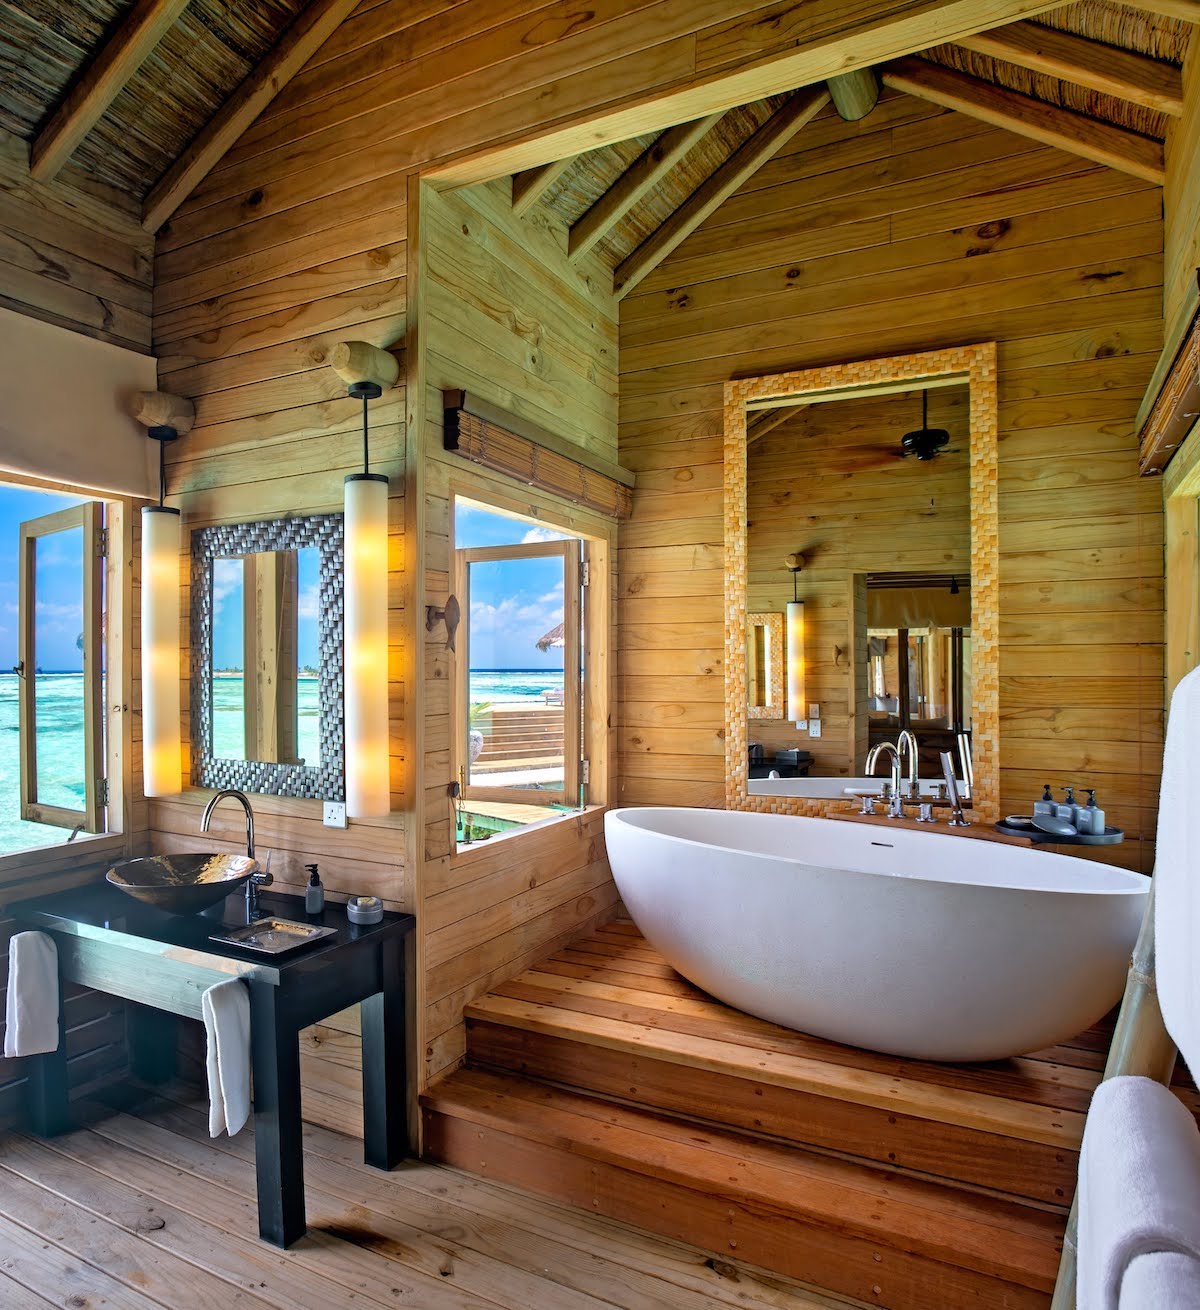 A wooden bathroom with freestanding bath overlooking the Indian Ocean